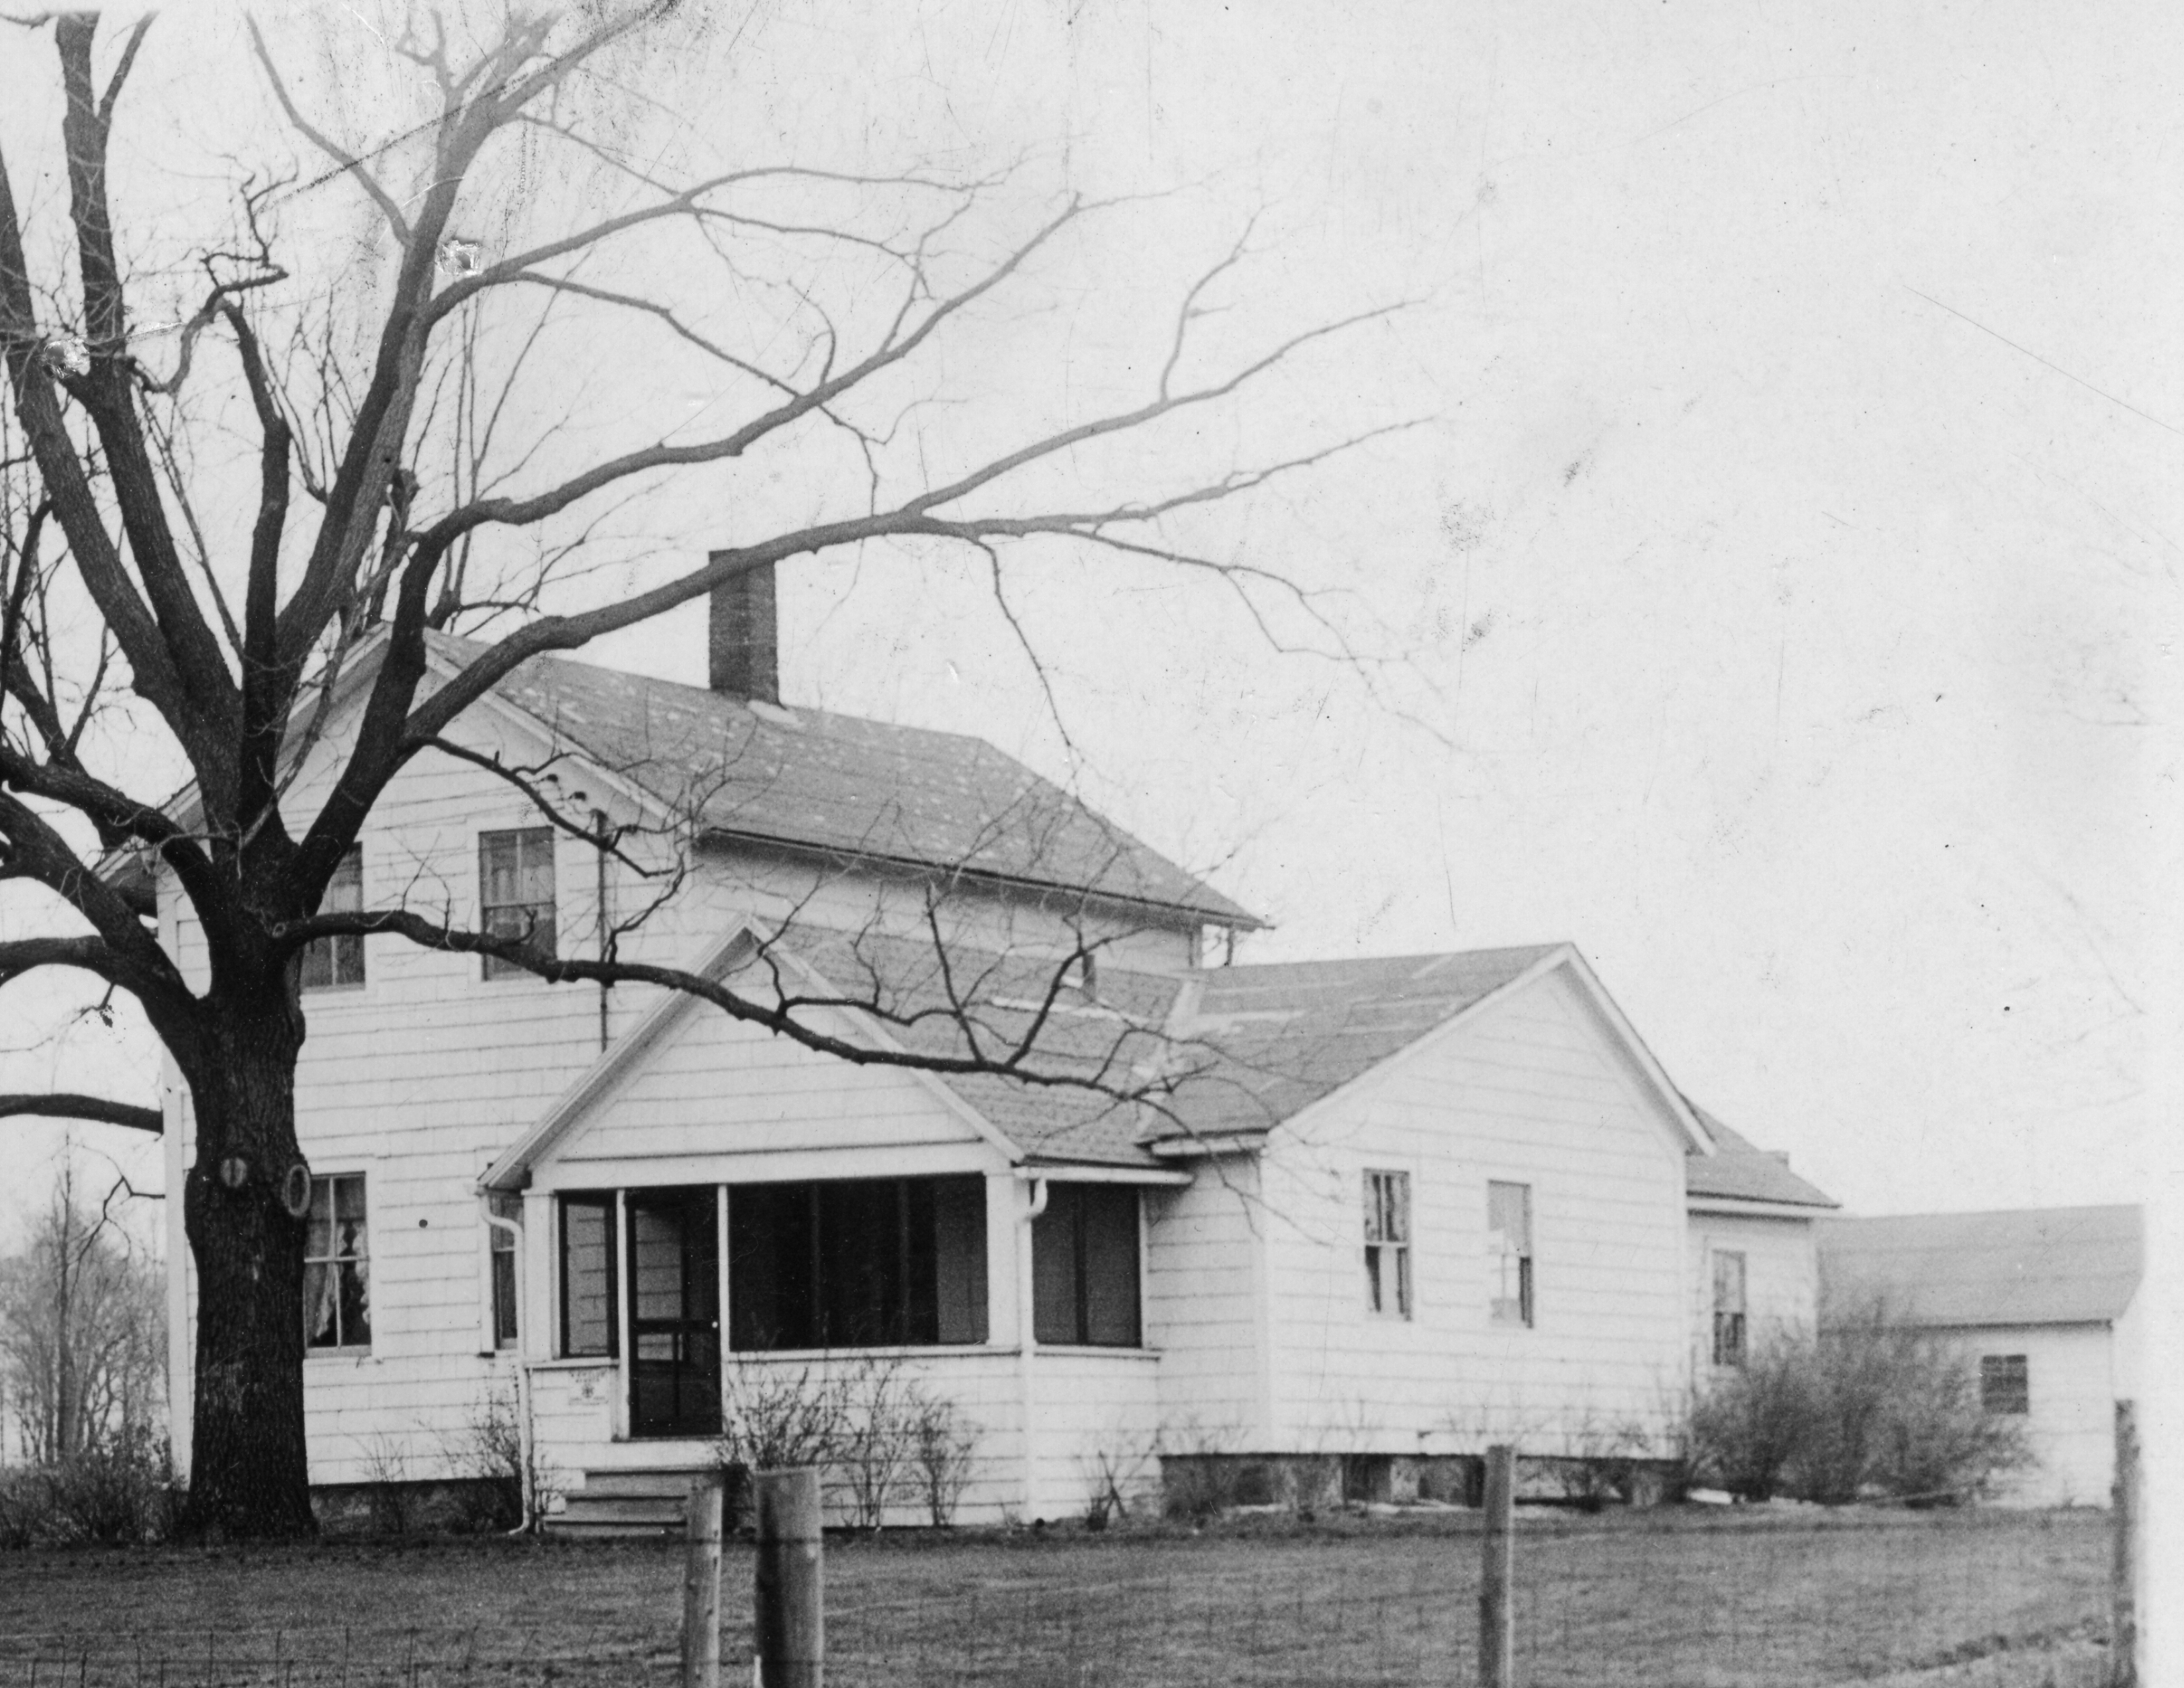 Photograph of Gidley family farm home